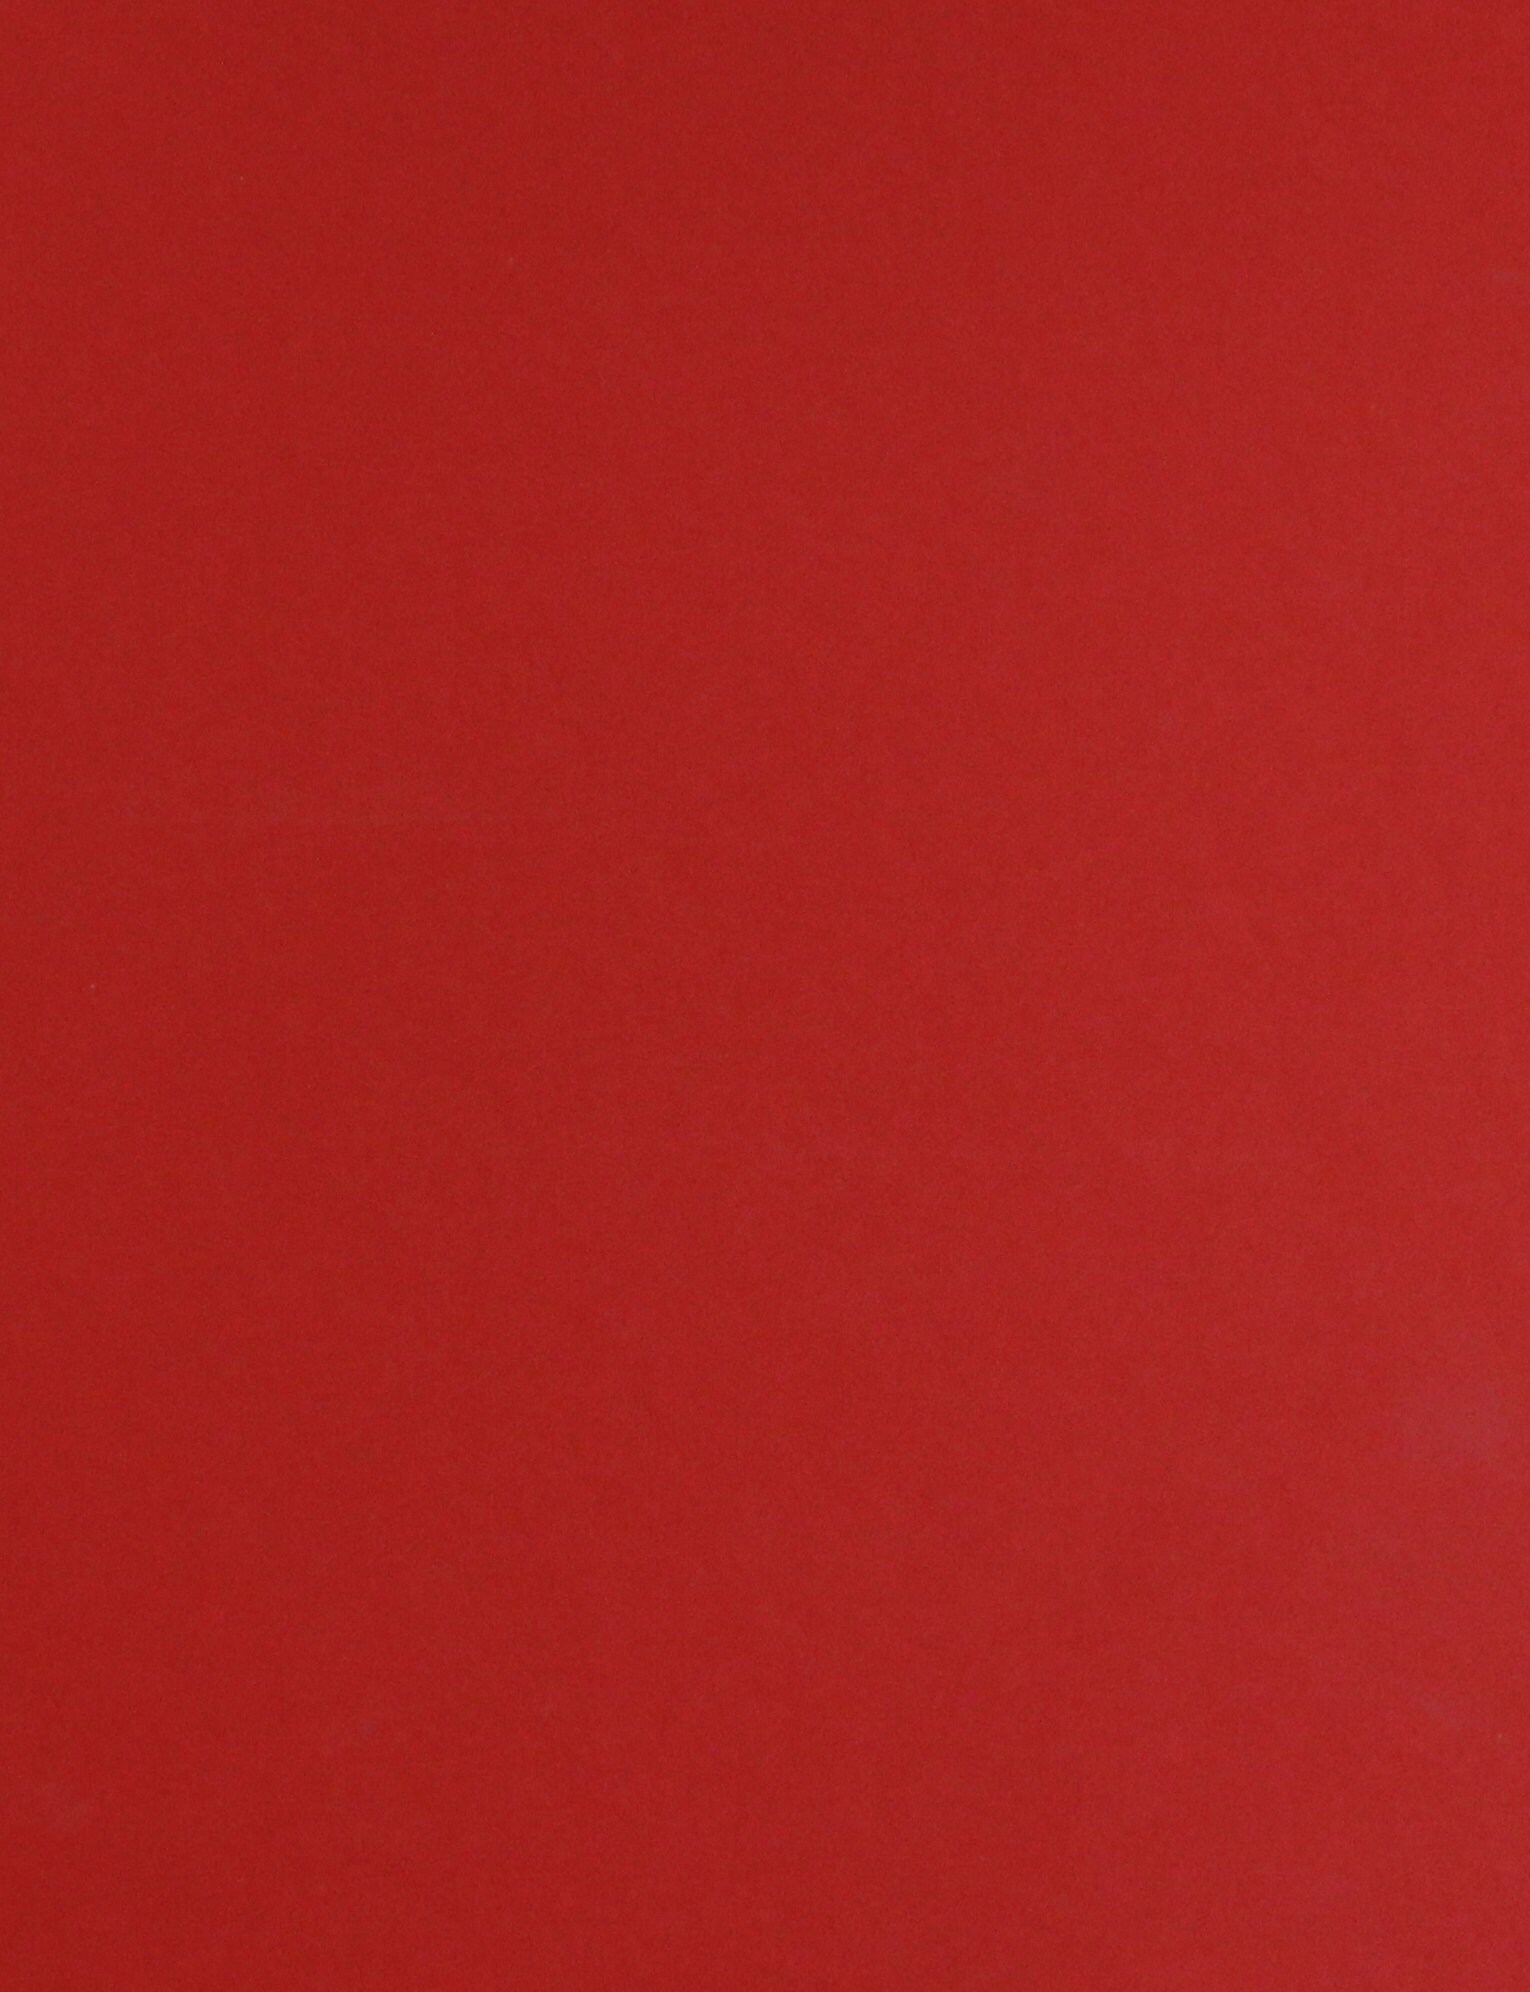 8.5x11 Scarlet Red Smooth Scrapbook Cardstock Paper Crafts | Etsy